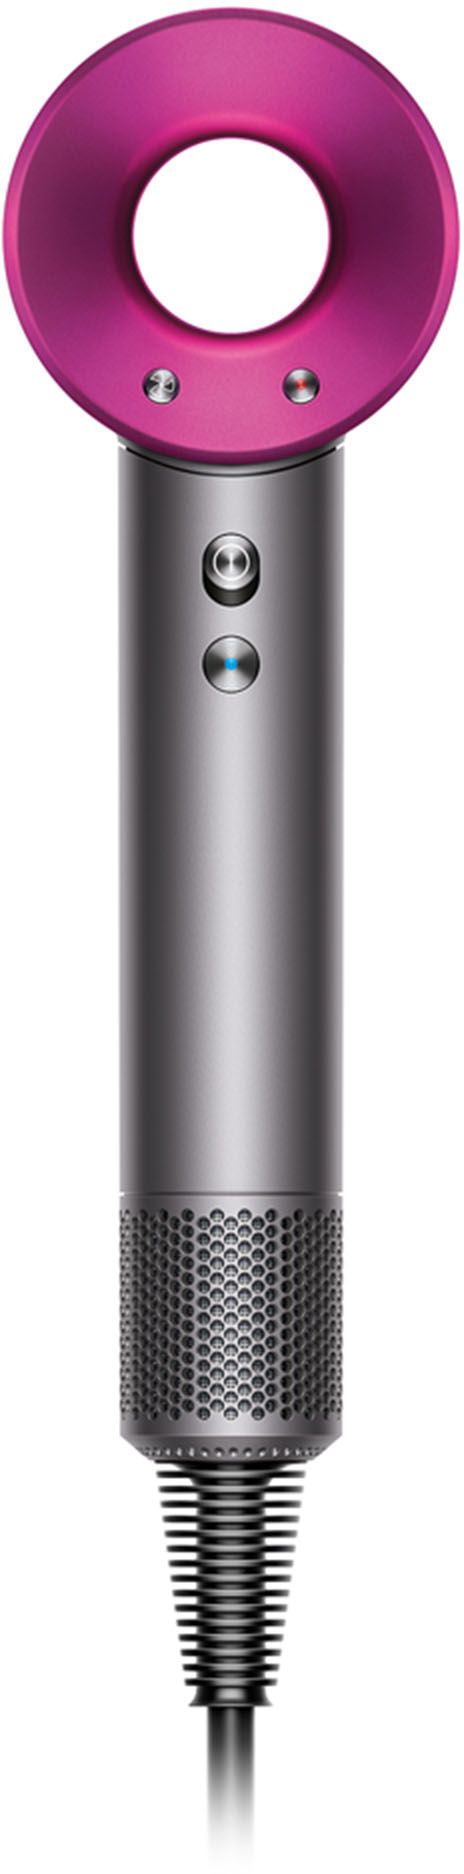 Dyson Supersonic Hair Dryer Iron/Iron/Fuchsia 386727-01 - Best Buy | Best Buy U.S.